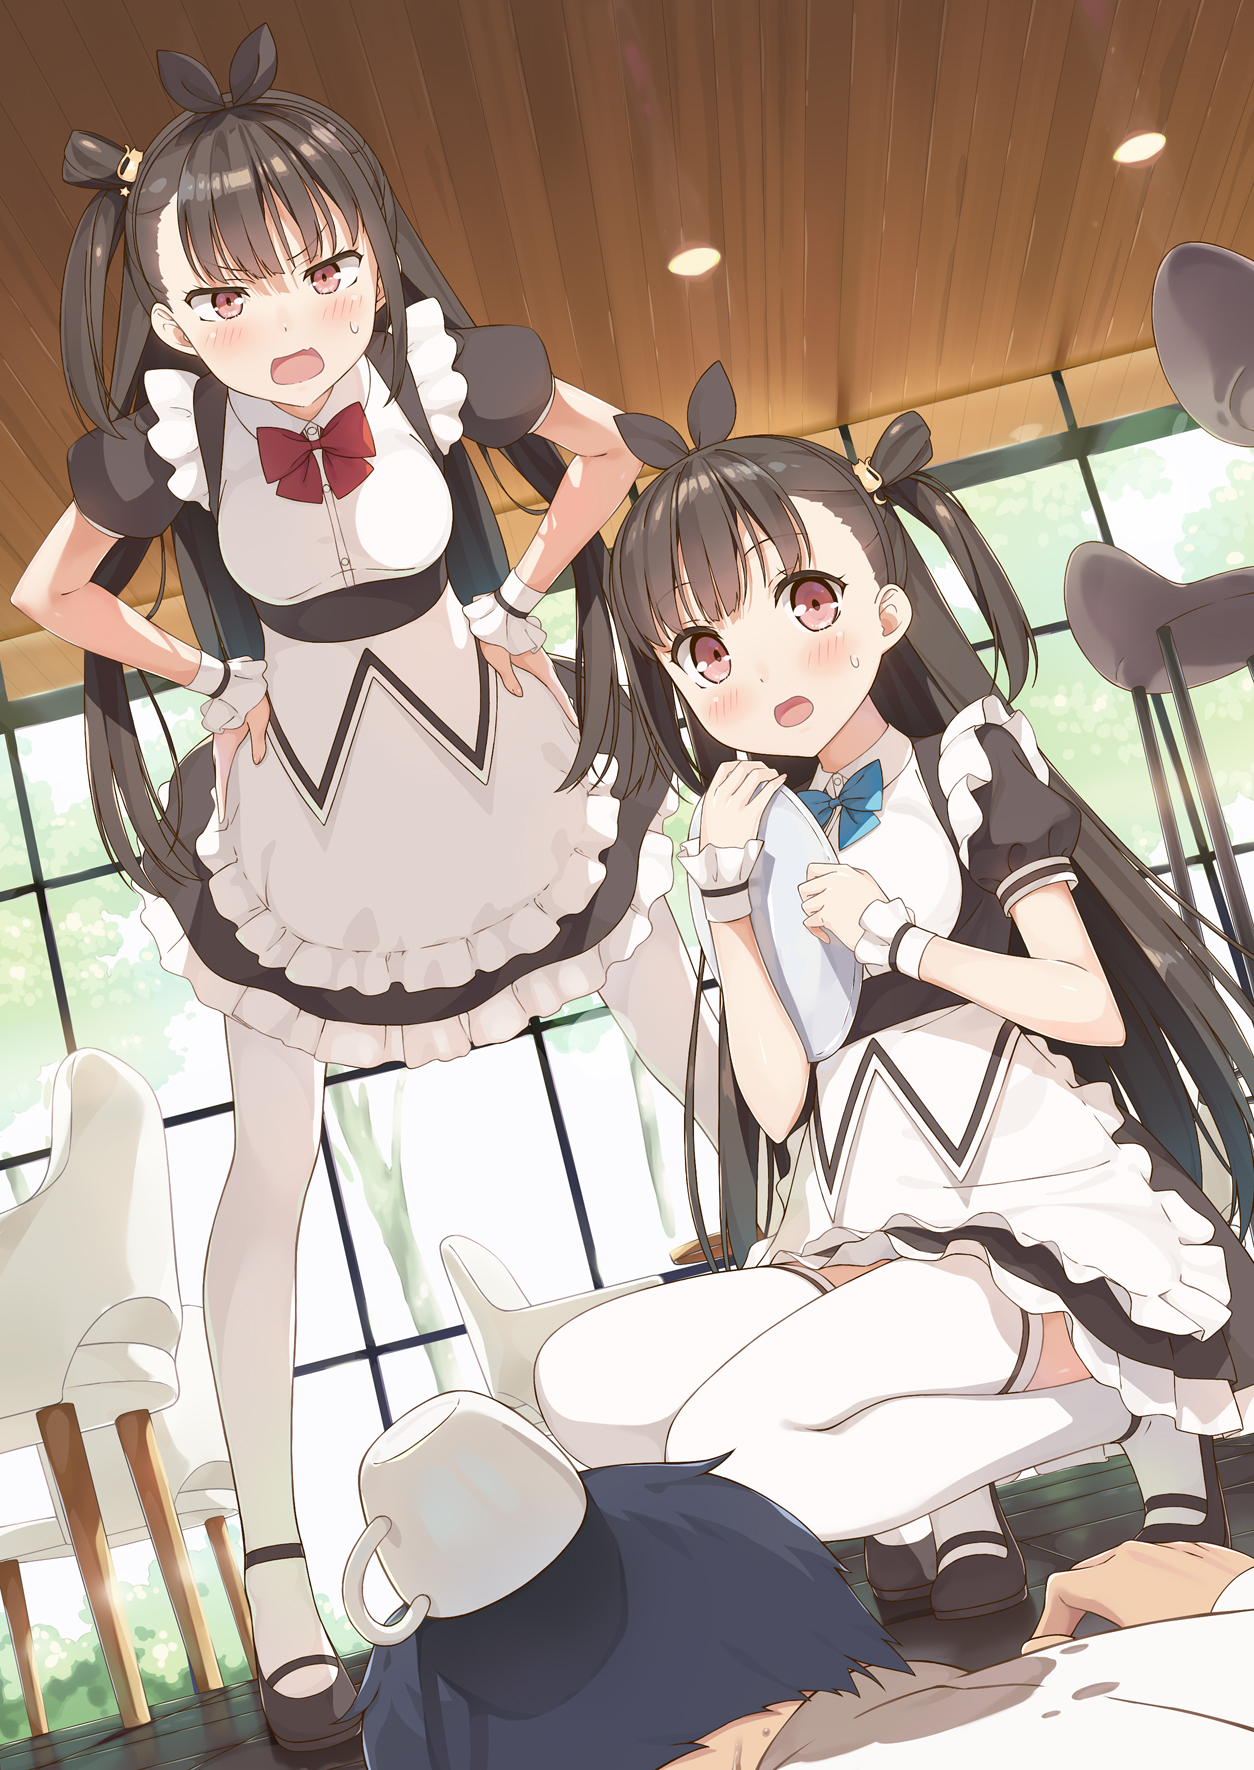 Anime 1254x1770 anime anime girls two women original characters maid maid outfit artwork digital art fan art